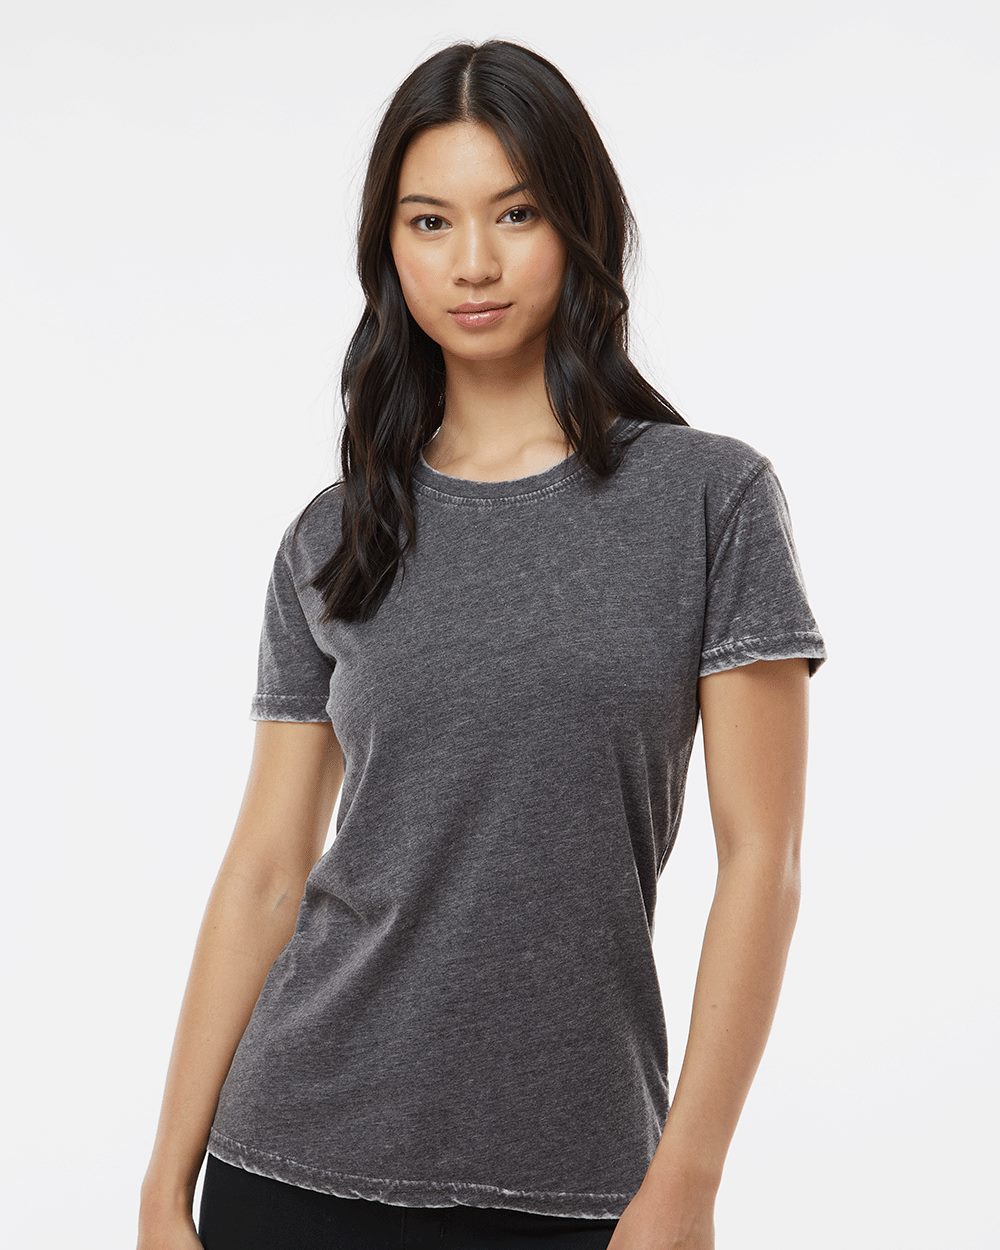 J. America 8116 - Women’s Zen Jersey T-Shirt